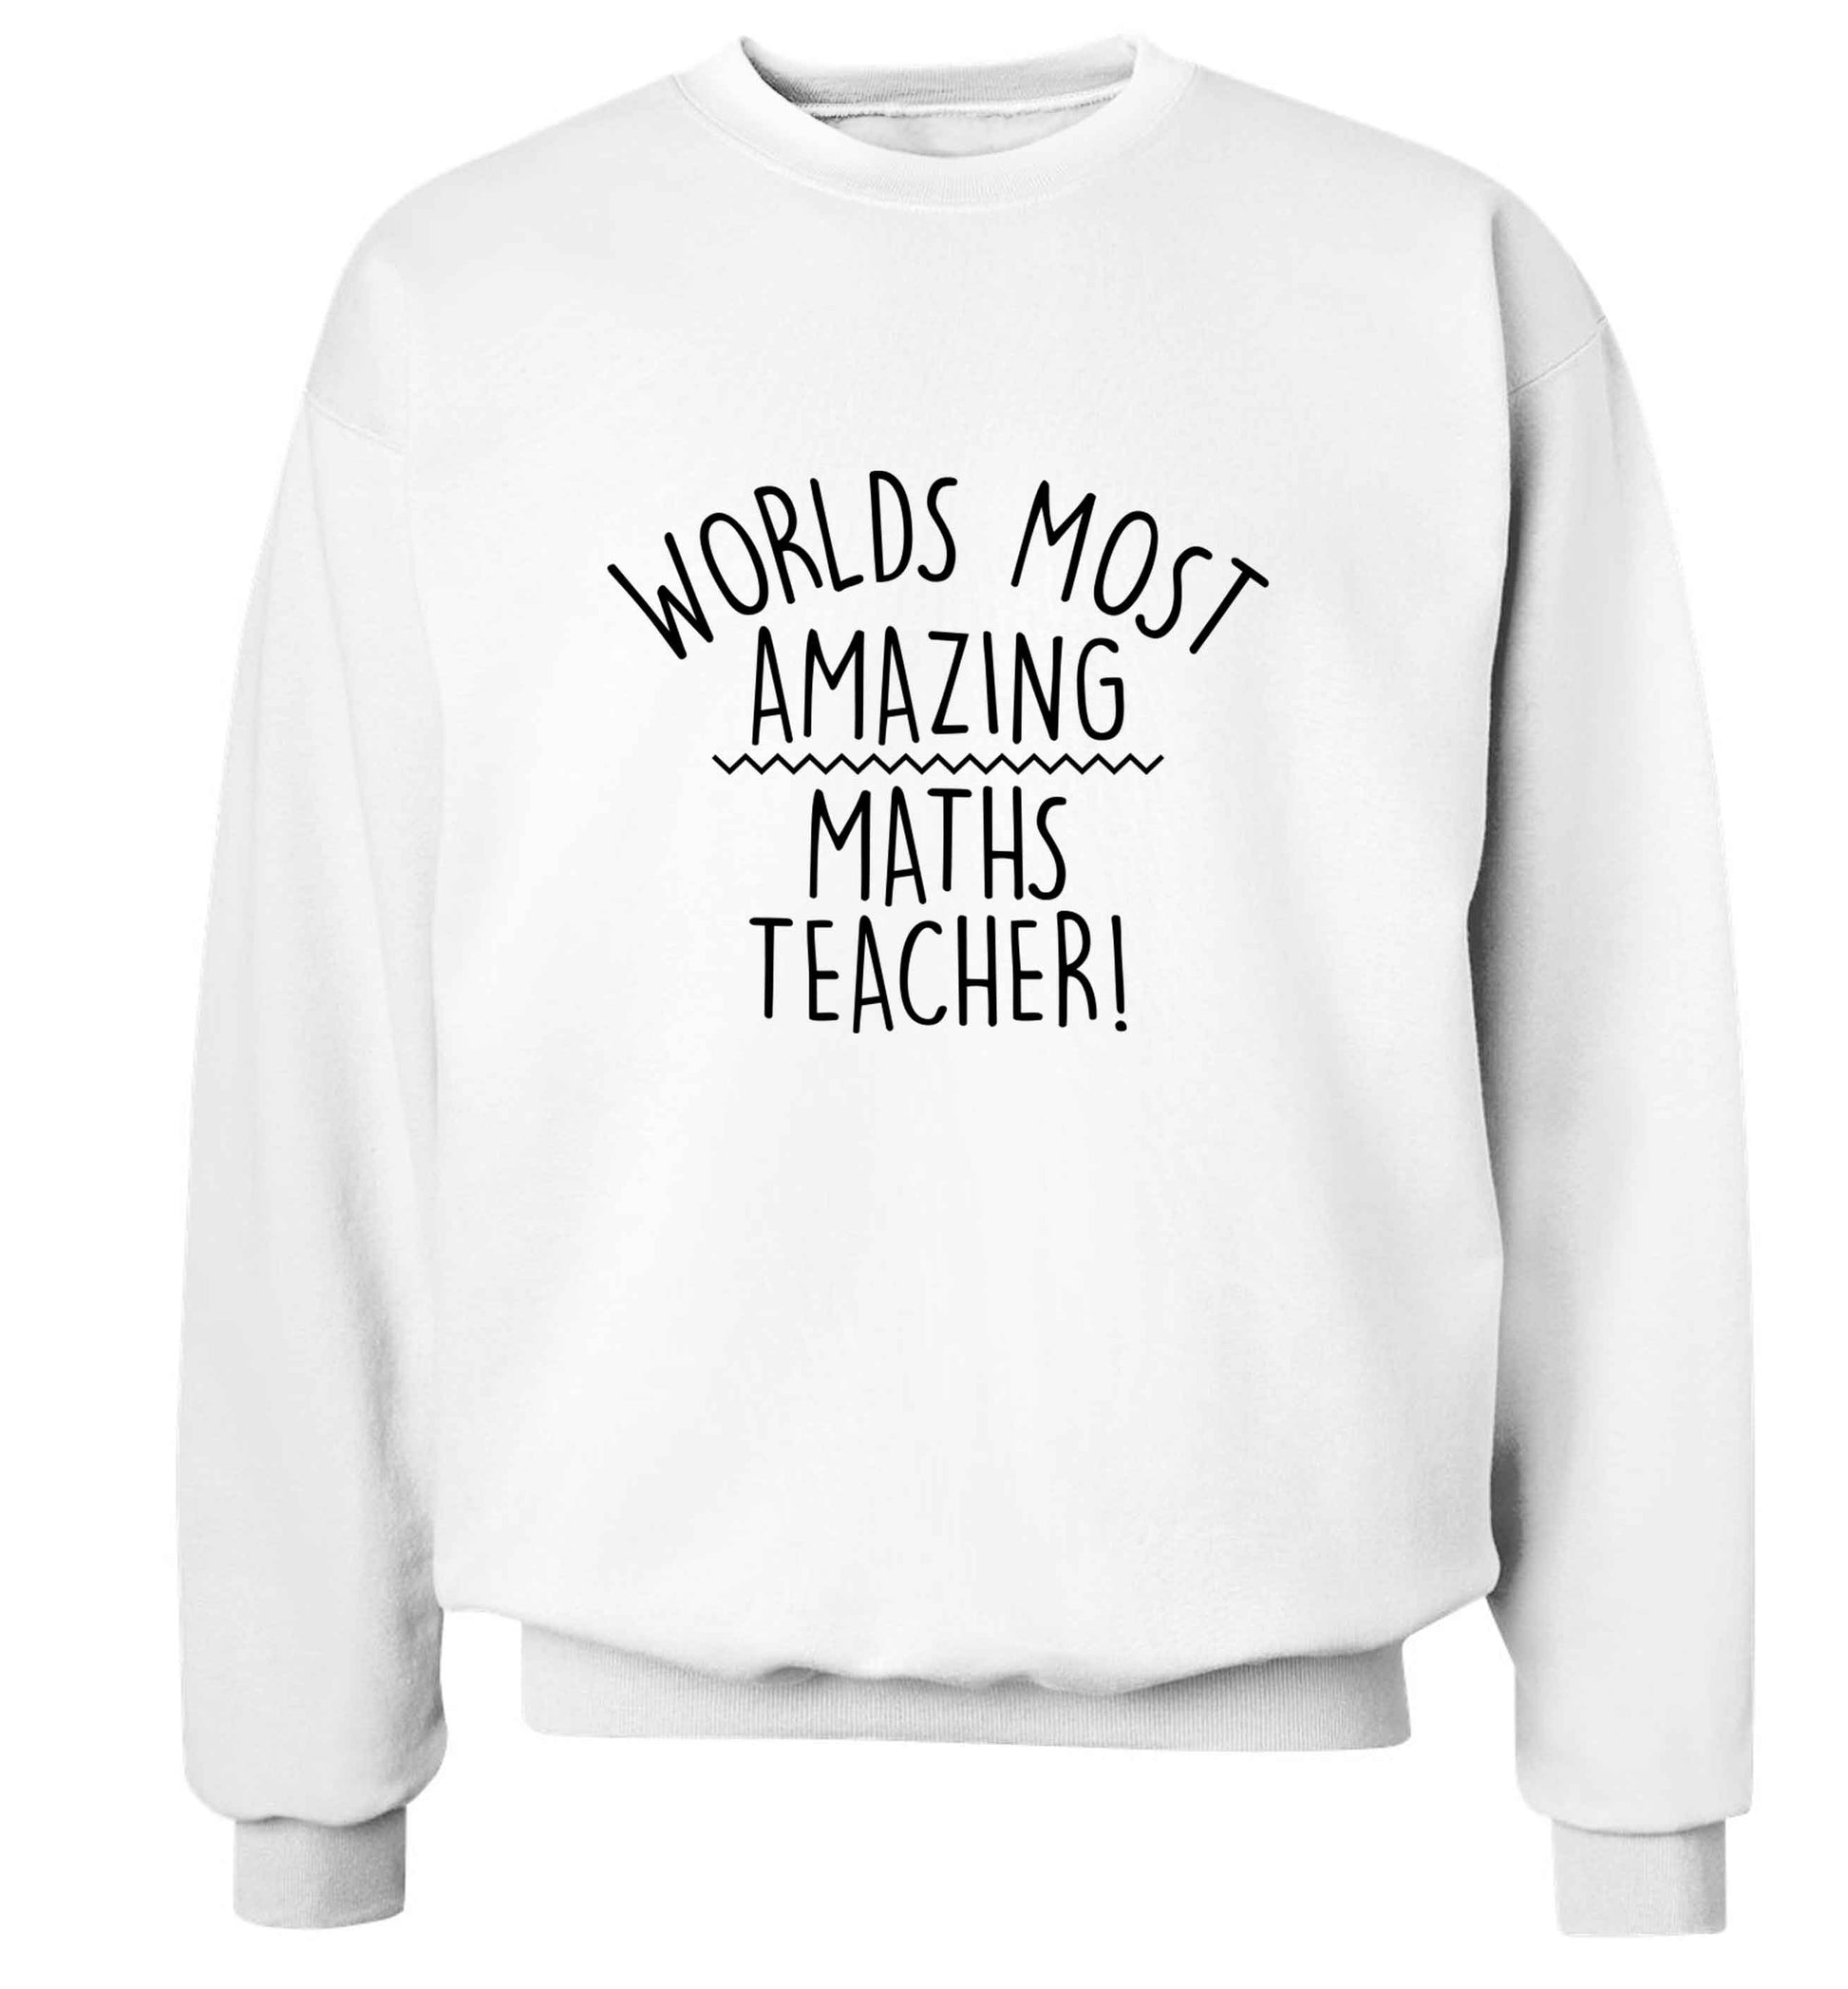 Worlds most amazing maths teacher adult's unisex white sweater 2XL